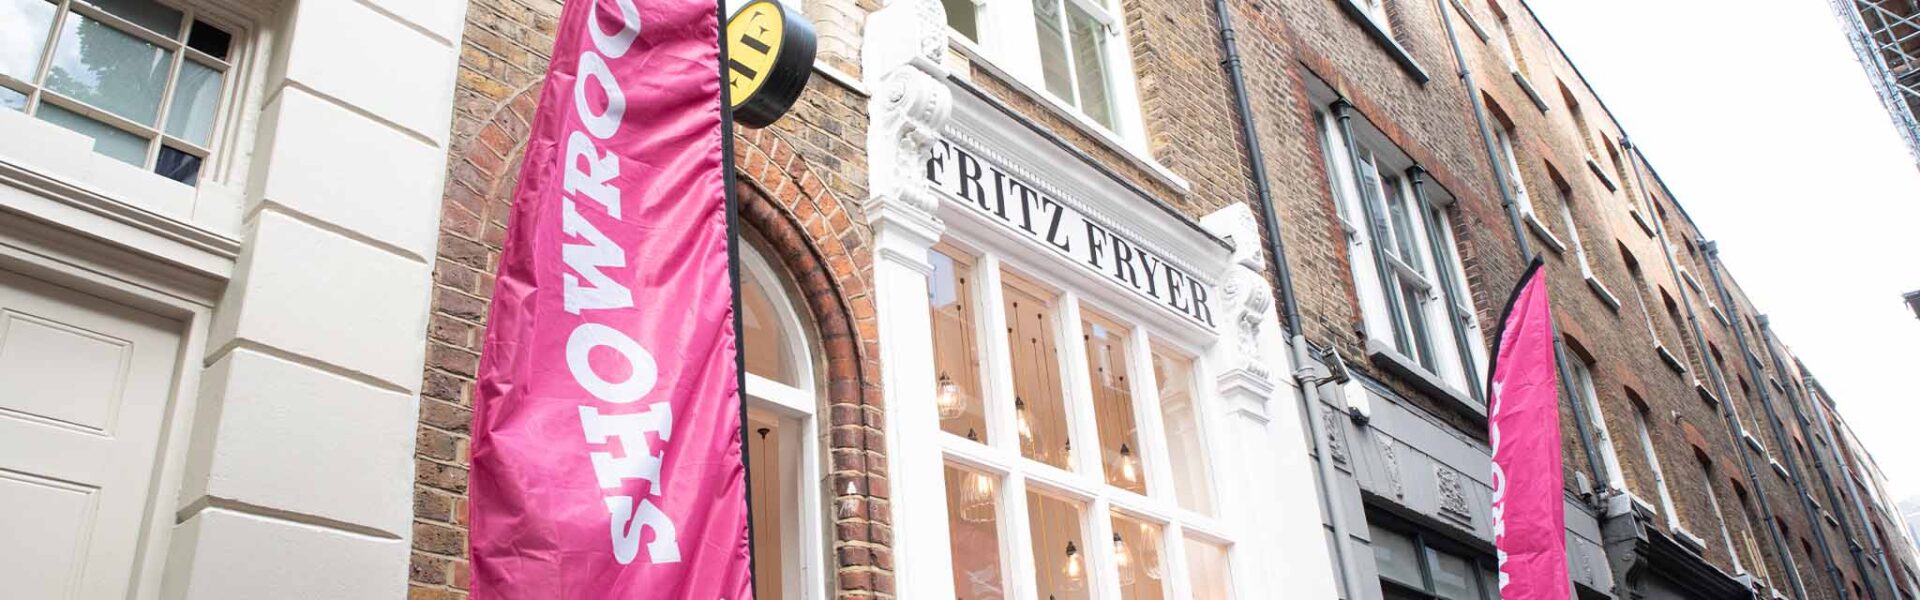 Fritz Fryer Clerkenwell showroom featuring Clerkenwell Design Week pink banners